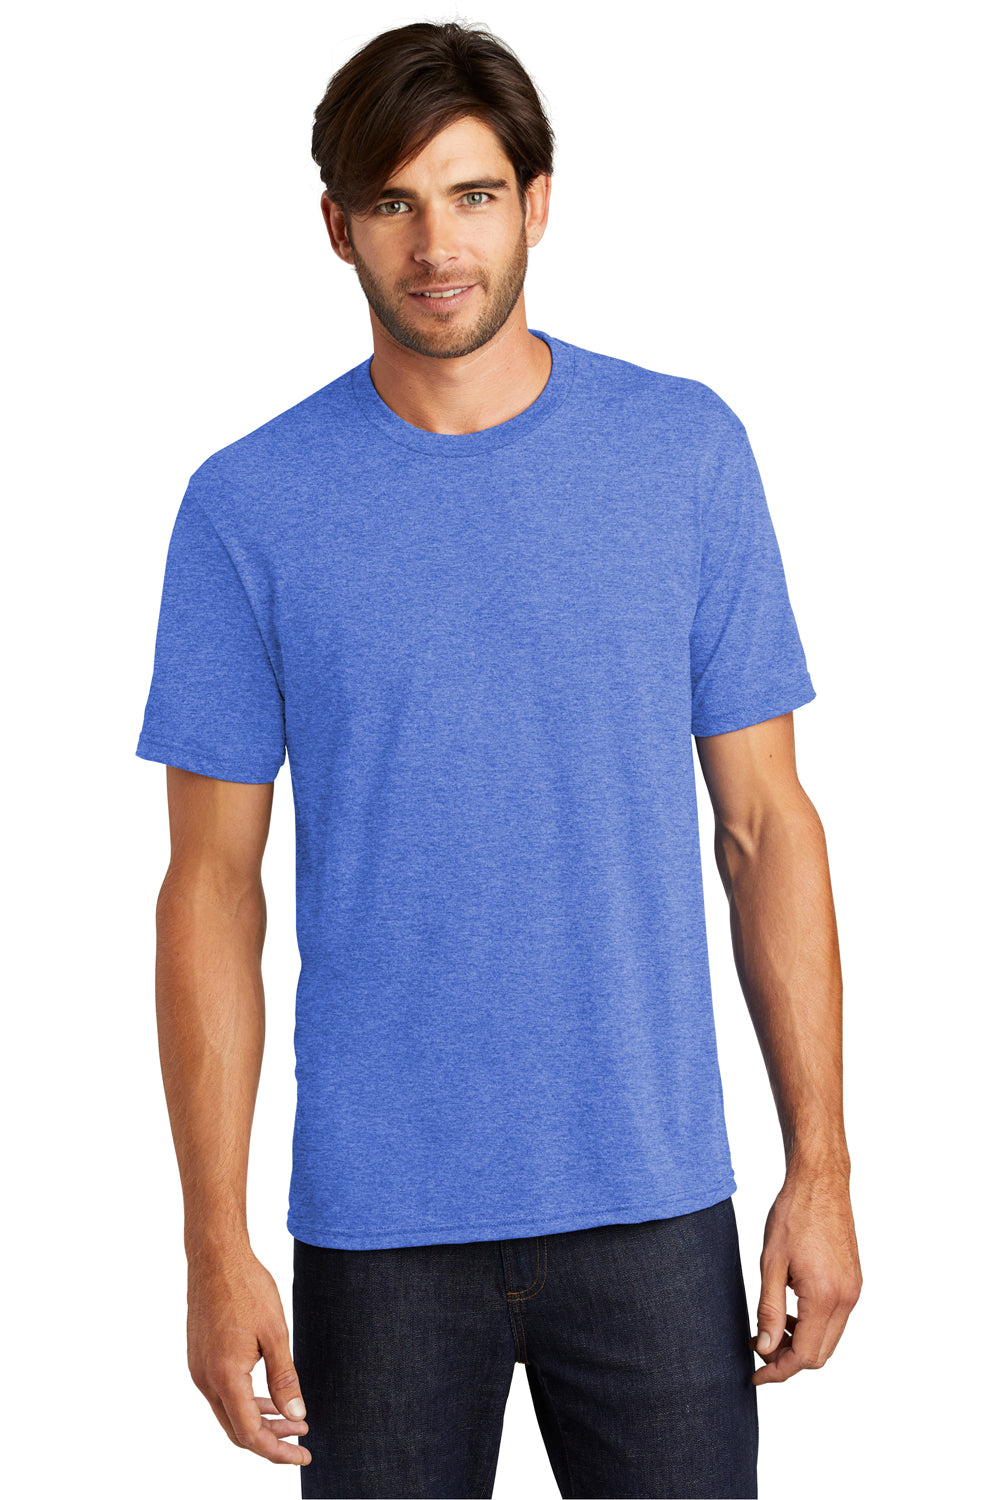 District DM130 Mens Perfect Tri Short Sleeve Crewneck T-Shirt Royal Blue Frost Front